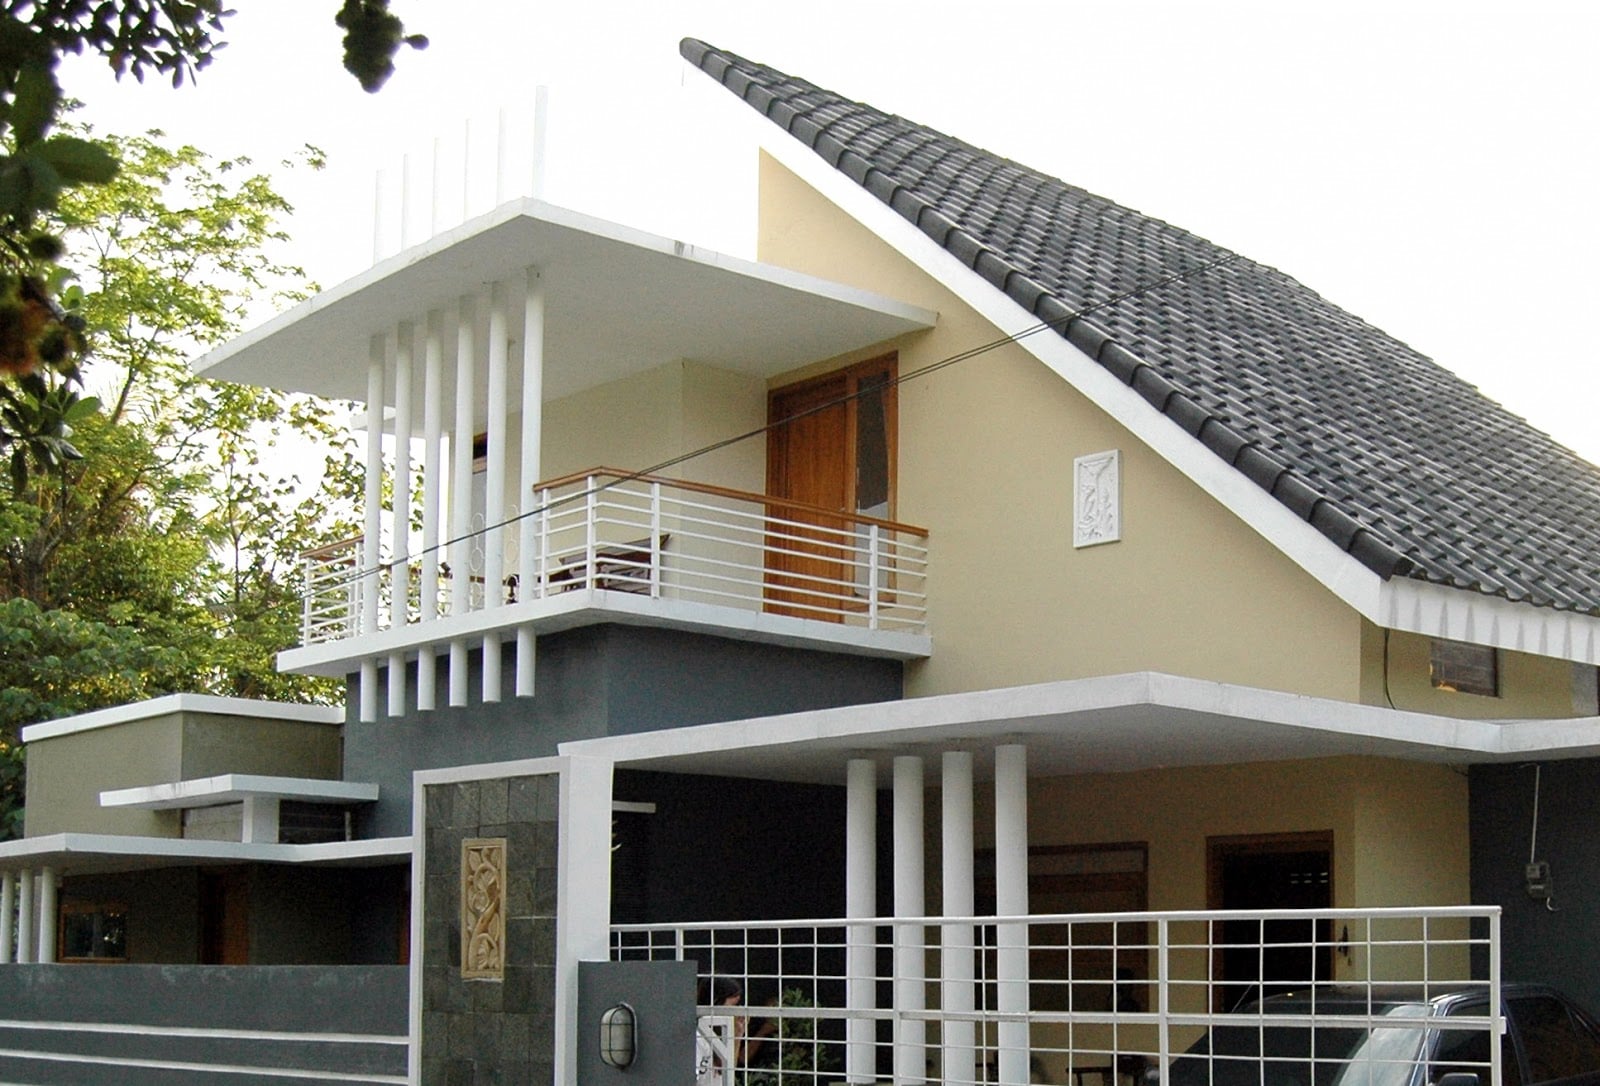 83 Kumpulan Desain Atap Rumah Tingkat Paling Banyak Di Minati